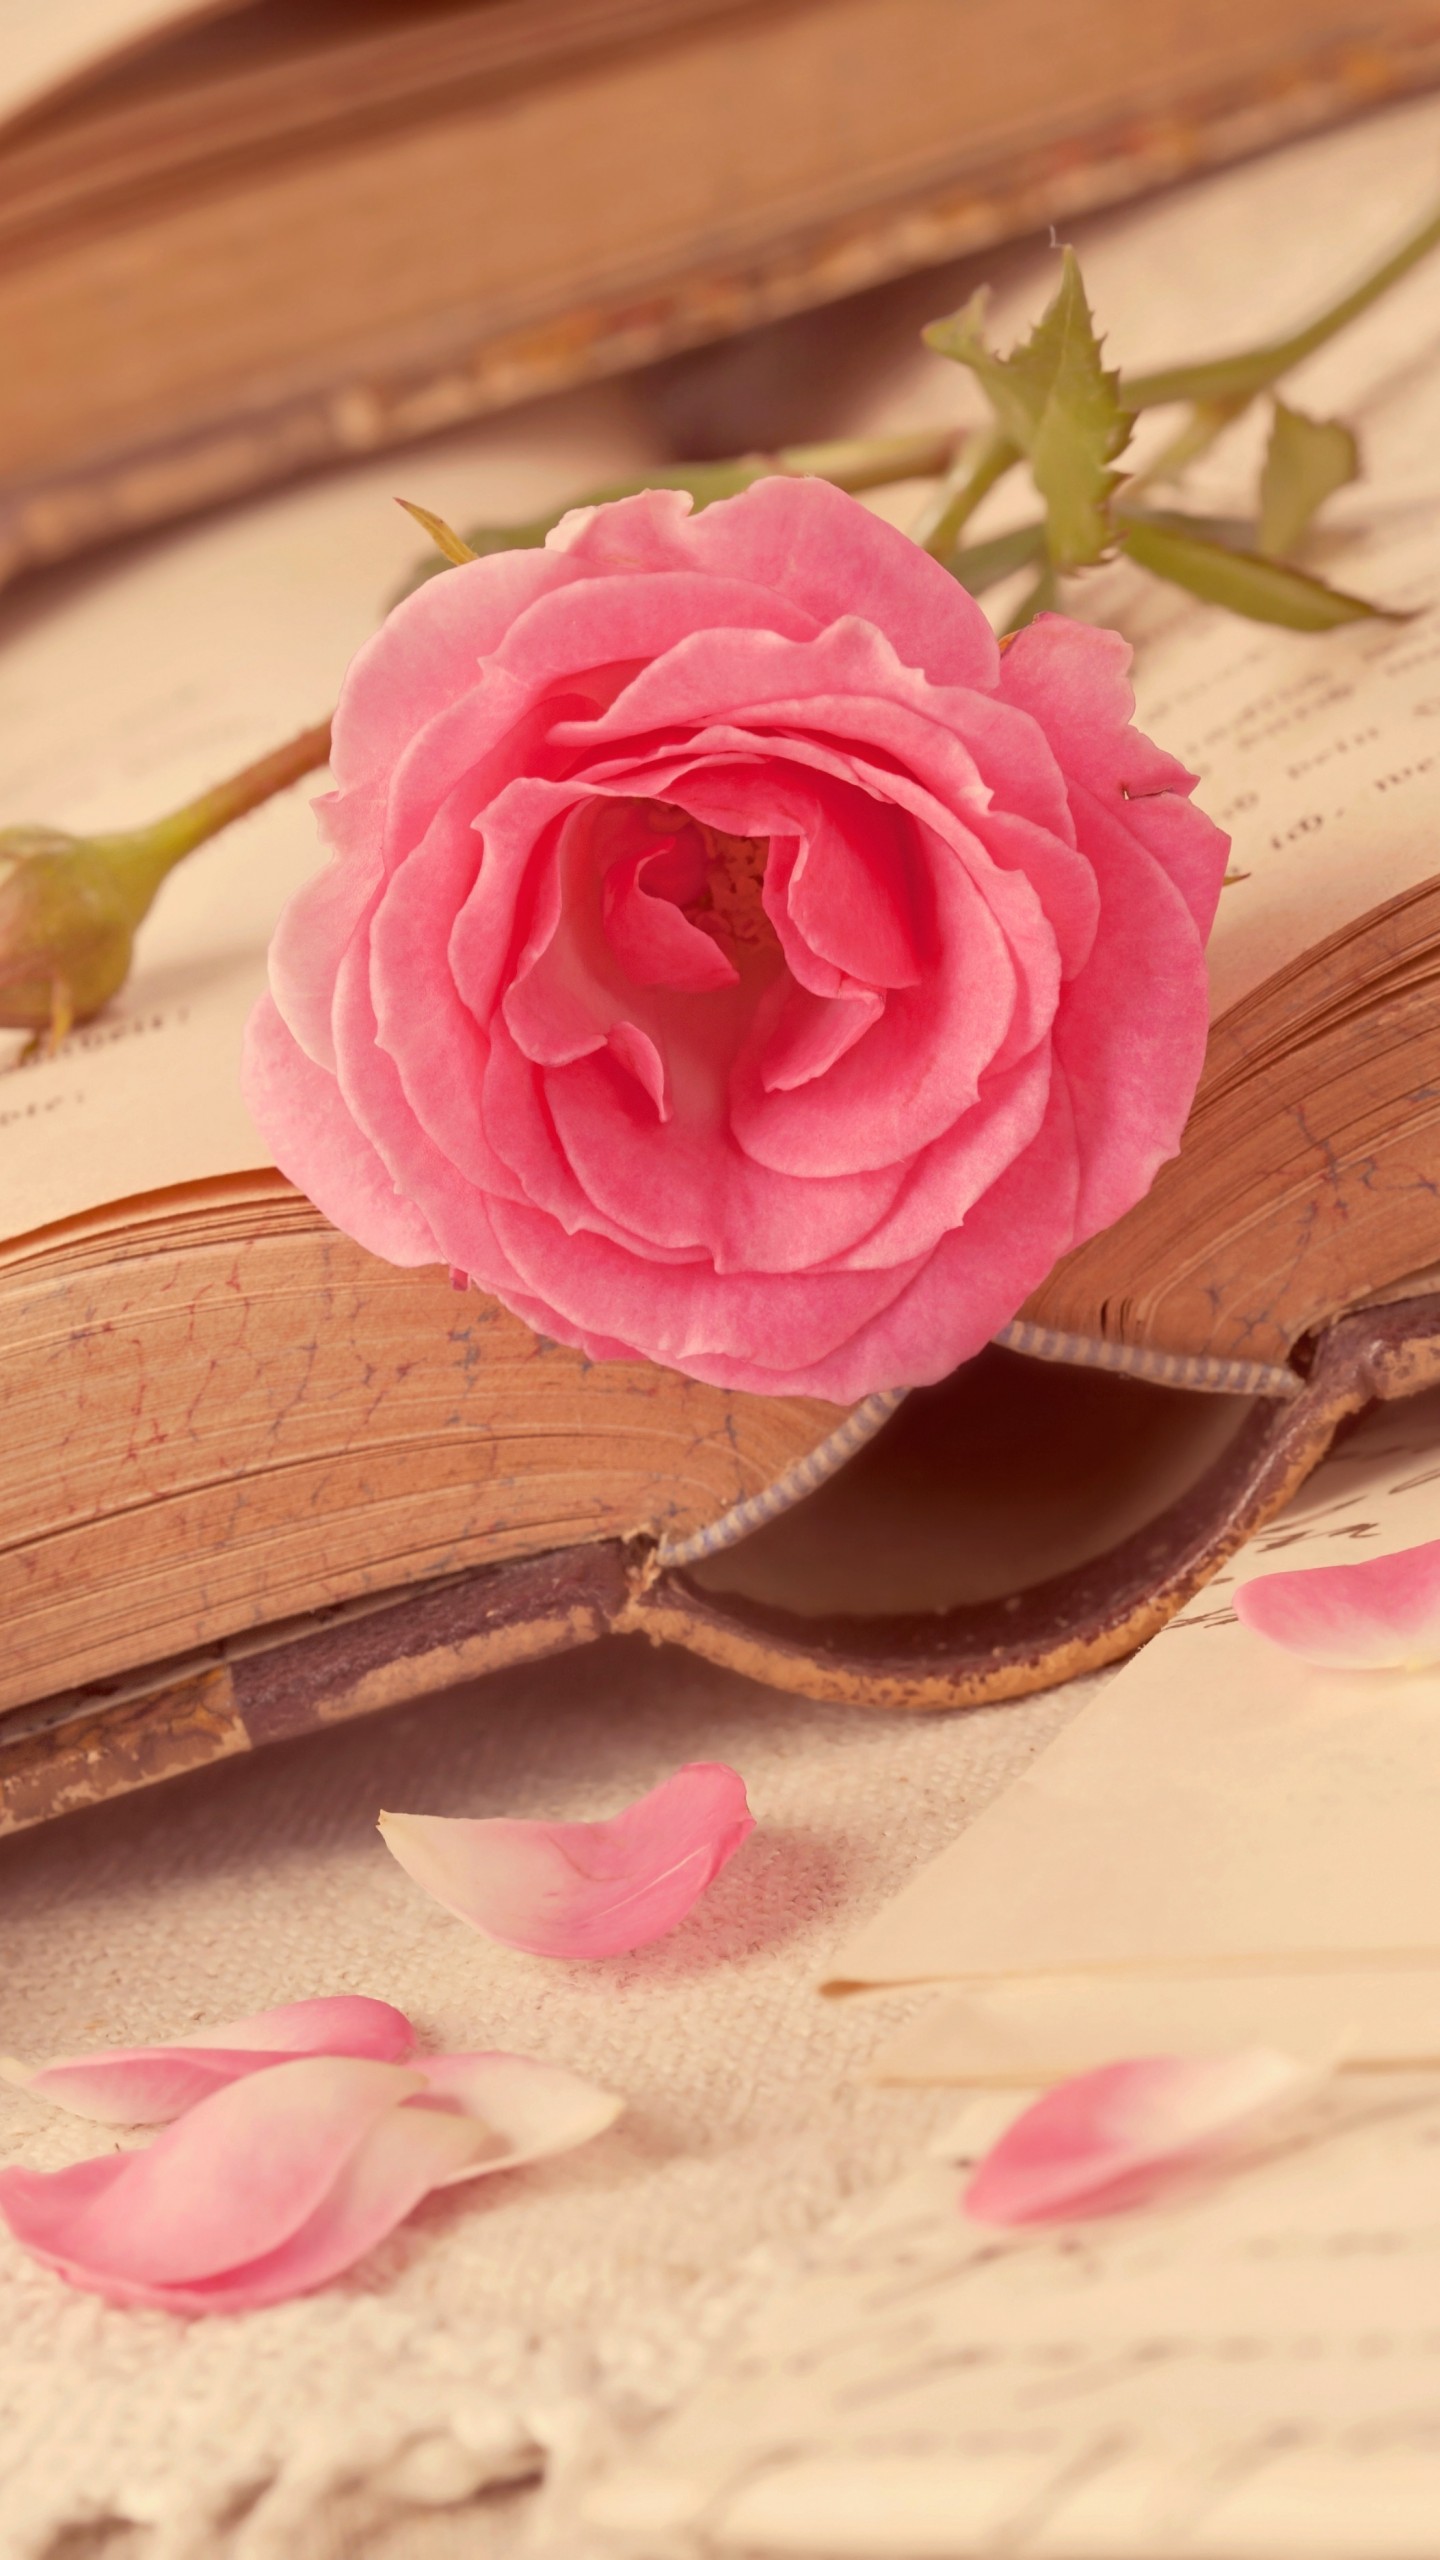 Flower Rose On Book - HD Wallpaper 